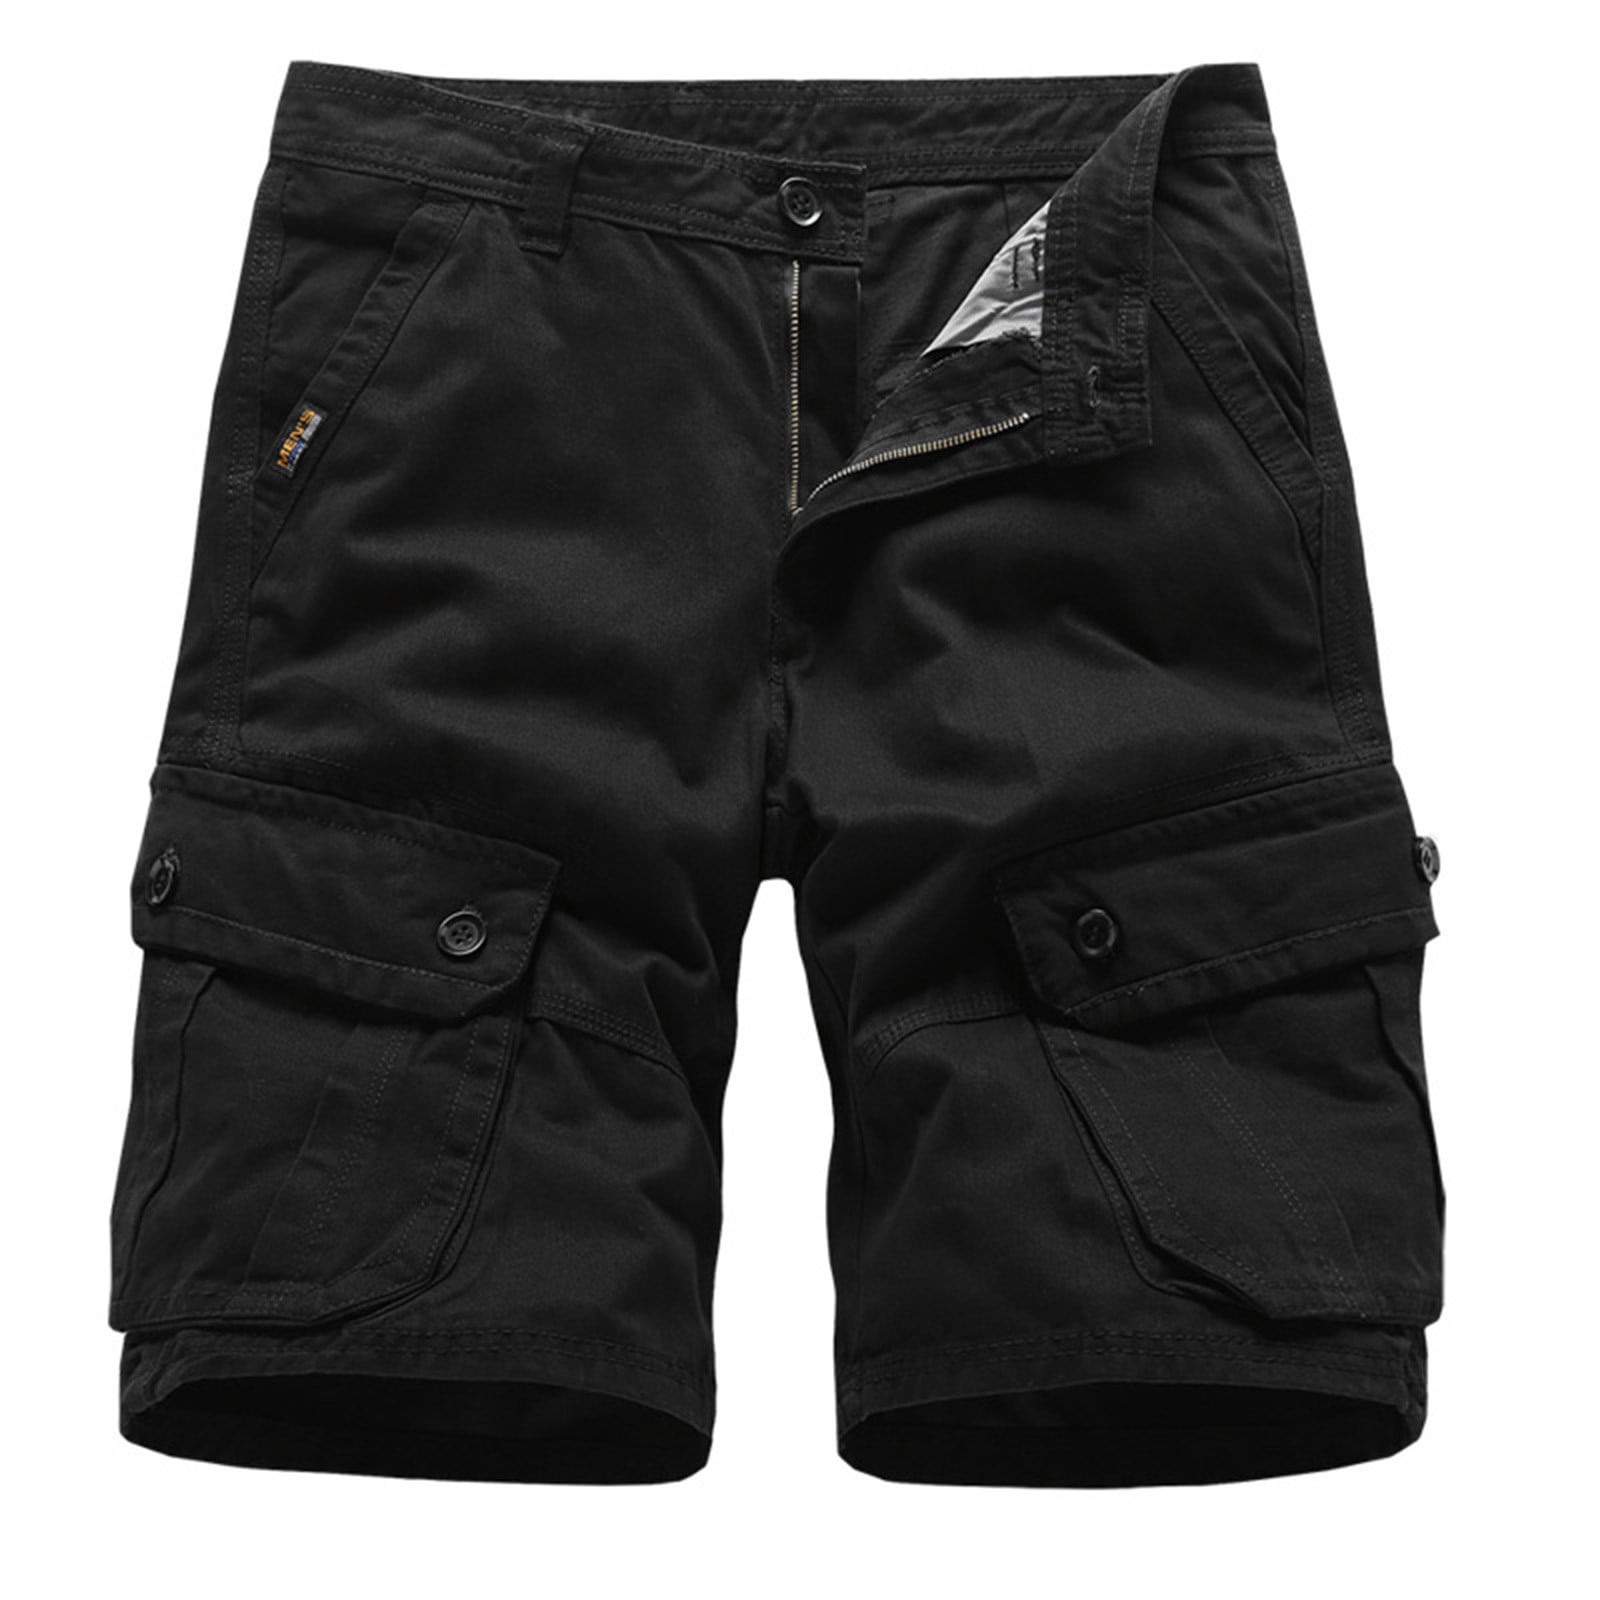 Men Cargo Shorts Clearance,TIANEK Fashion Multi-Pocket Bermuda Shorts ...